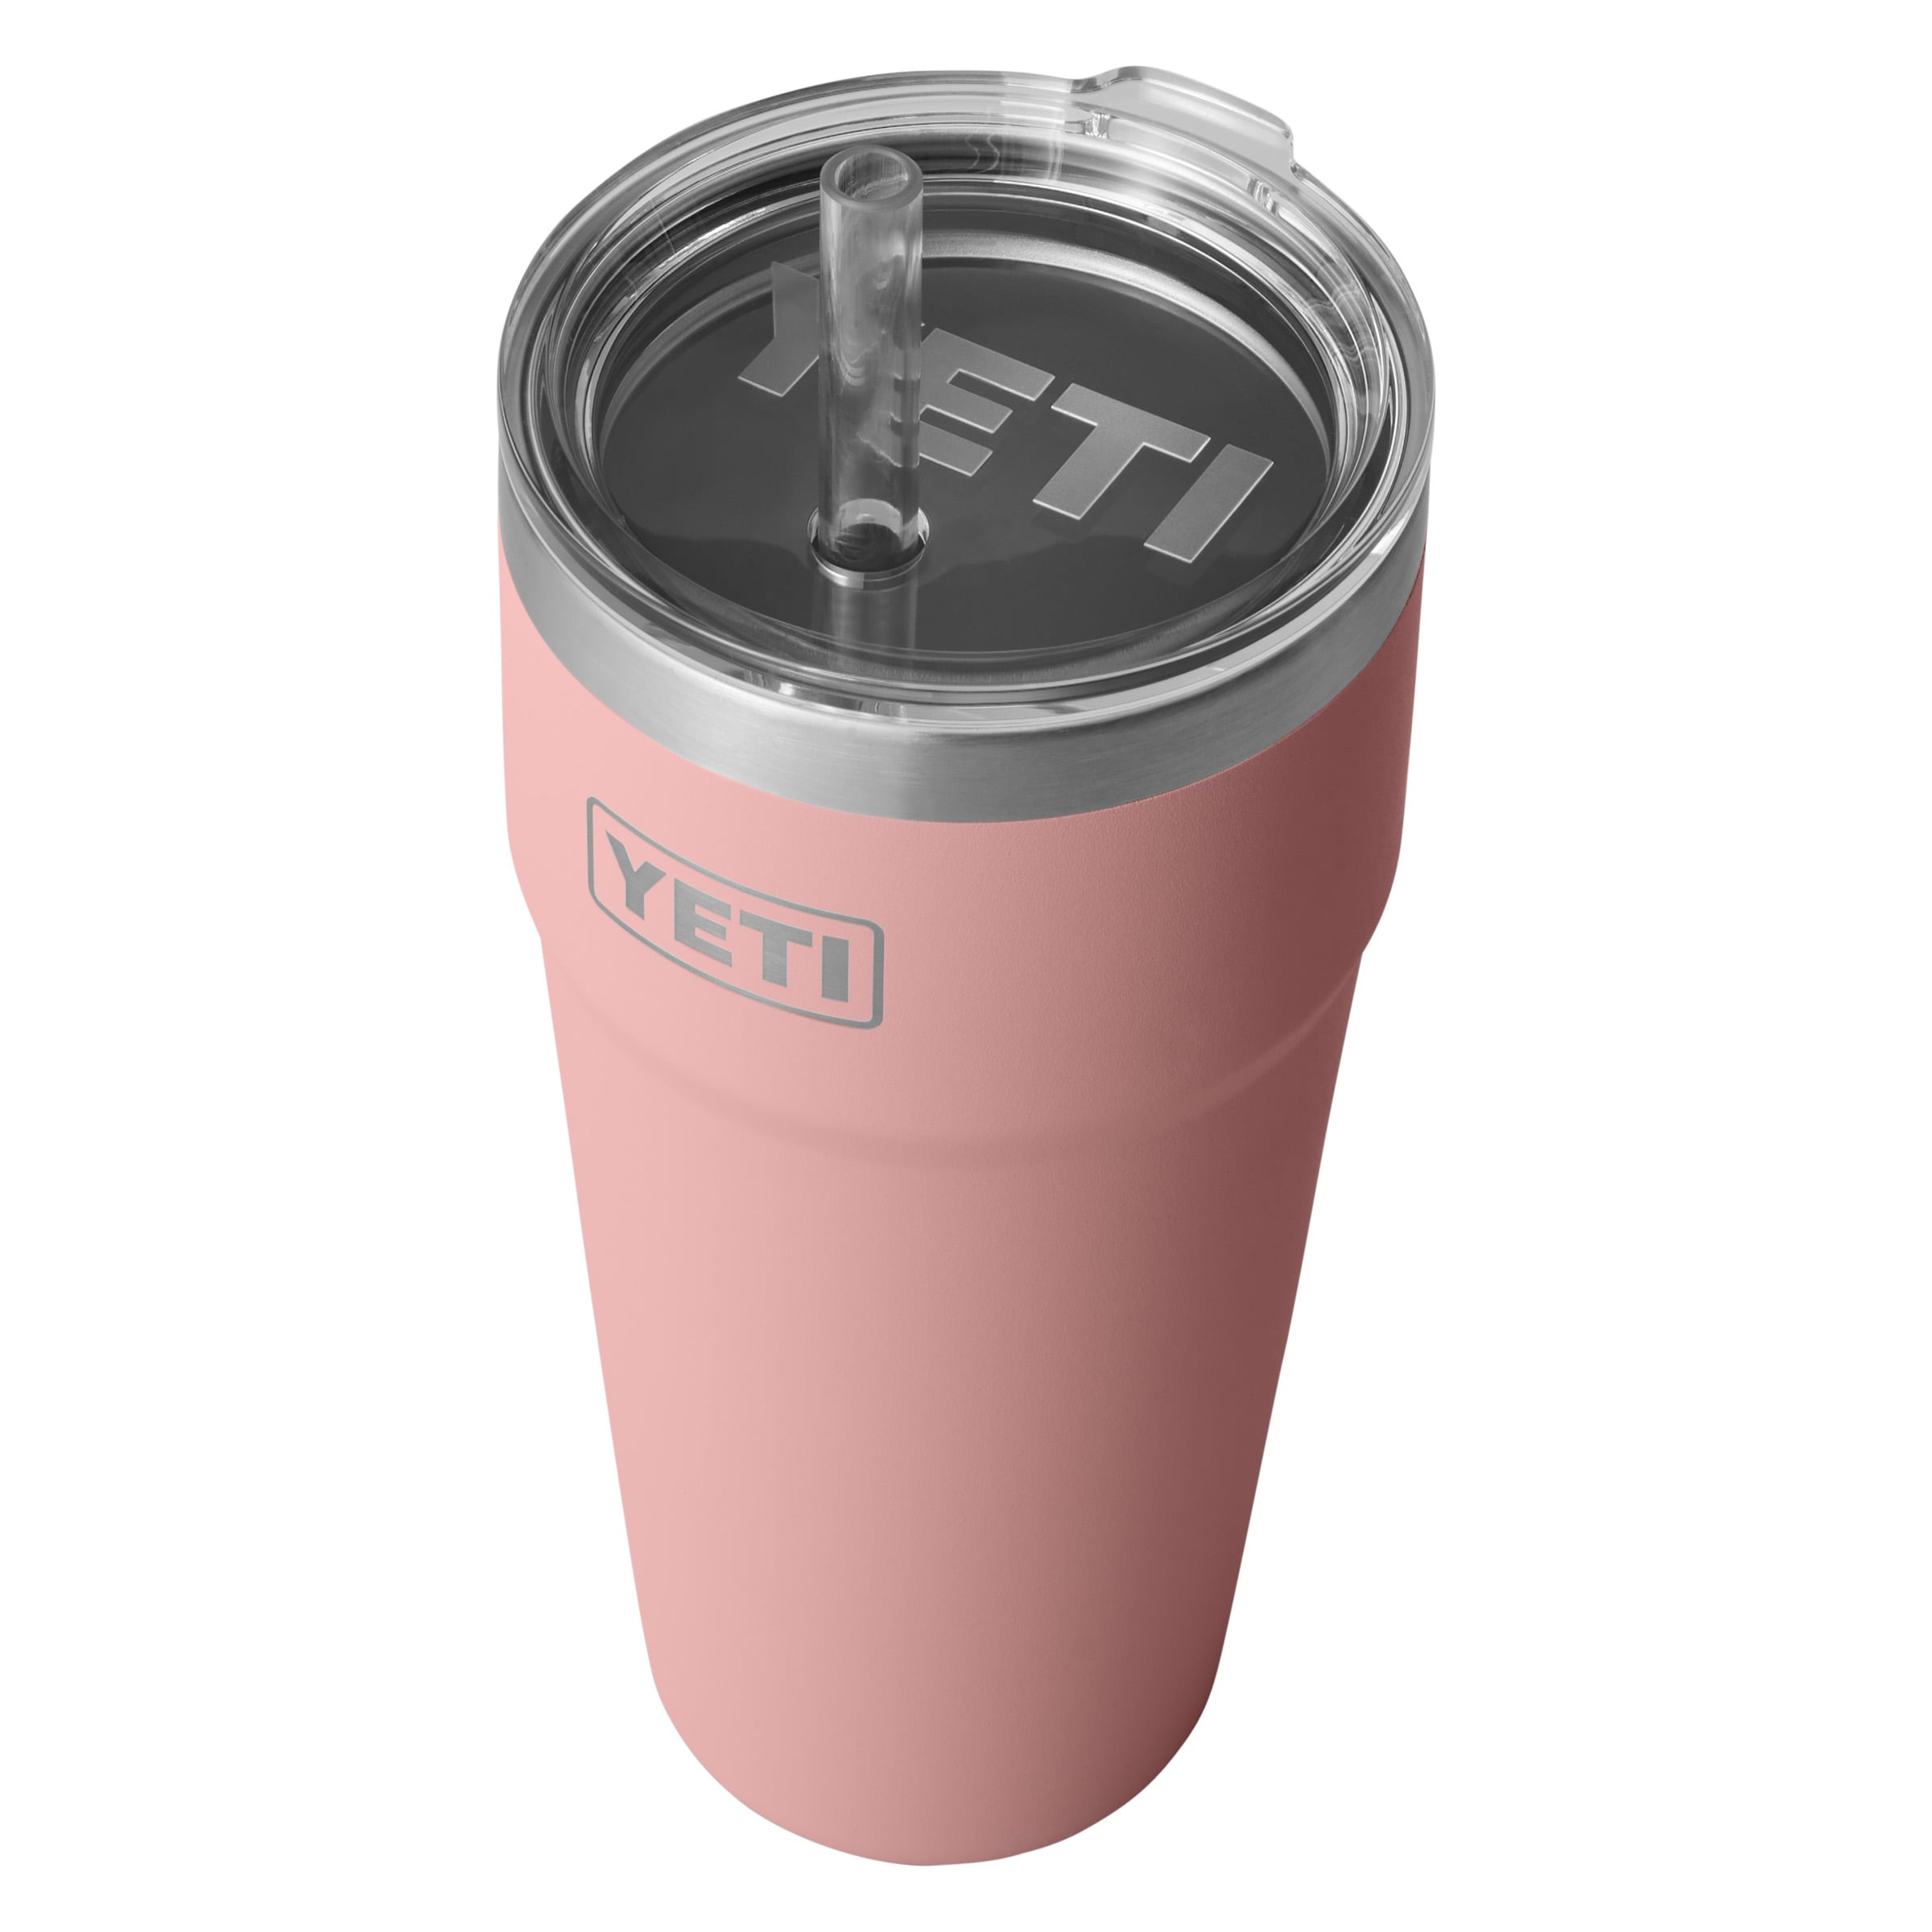 YETI - Rambler 26oz Straw Cup - Sandstone Pink